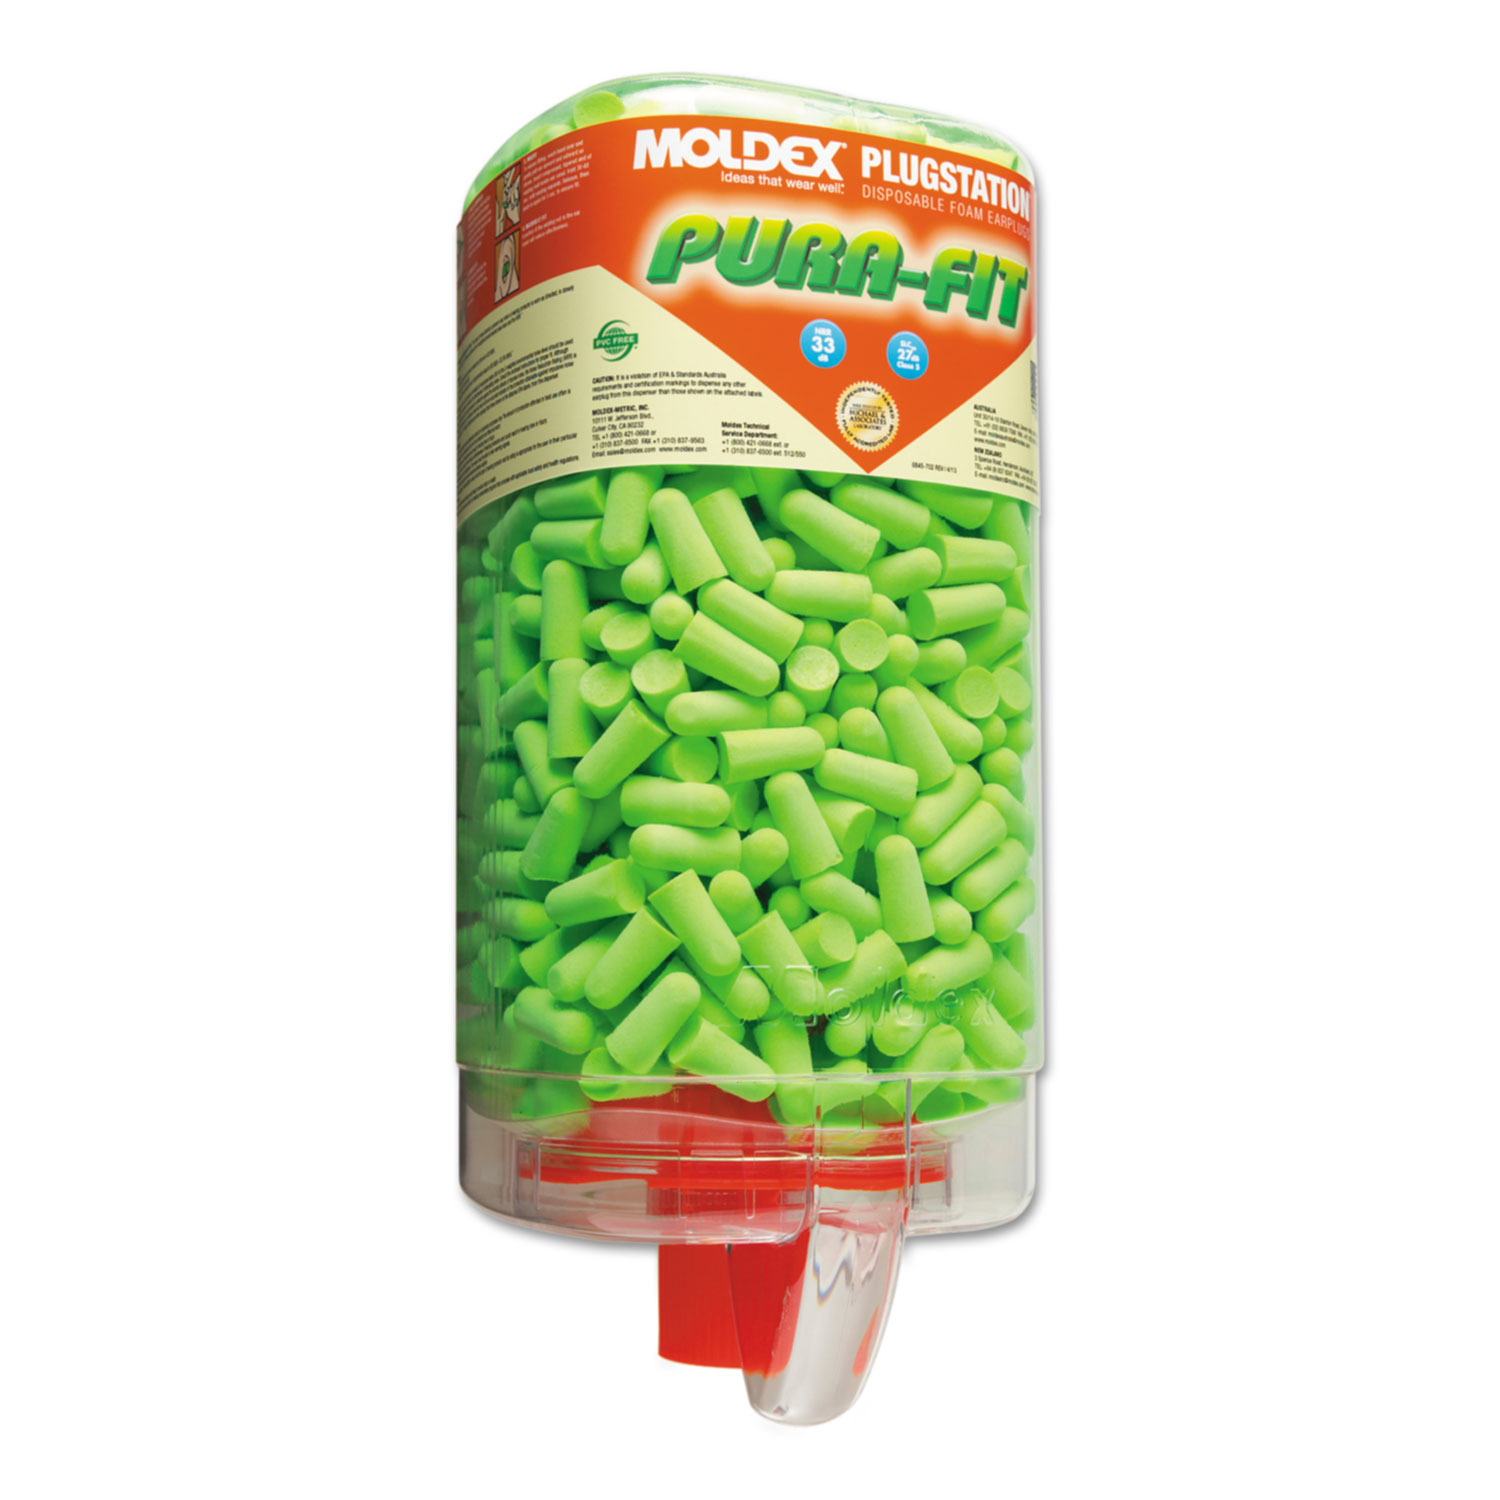  Moldex 6845 Pura-Fit PlugStation Earplug Dispenser, Cordless, 33NRR, Bright Green, 500 Pairs (MLX6845) 